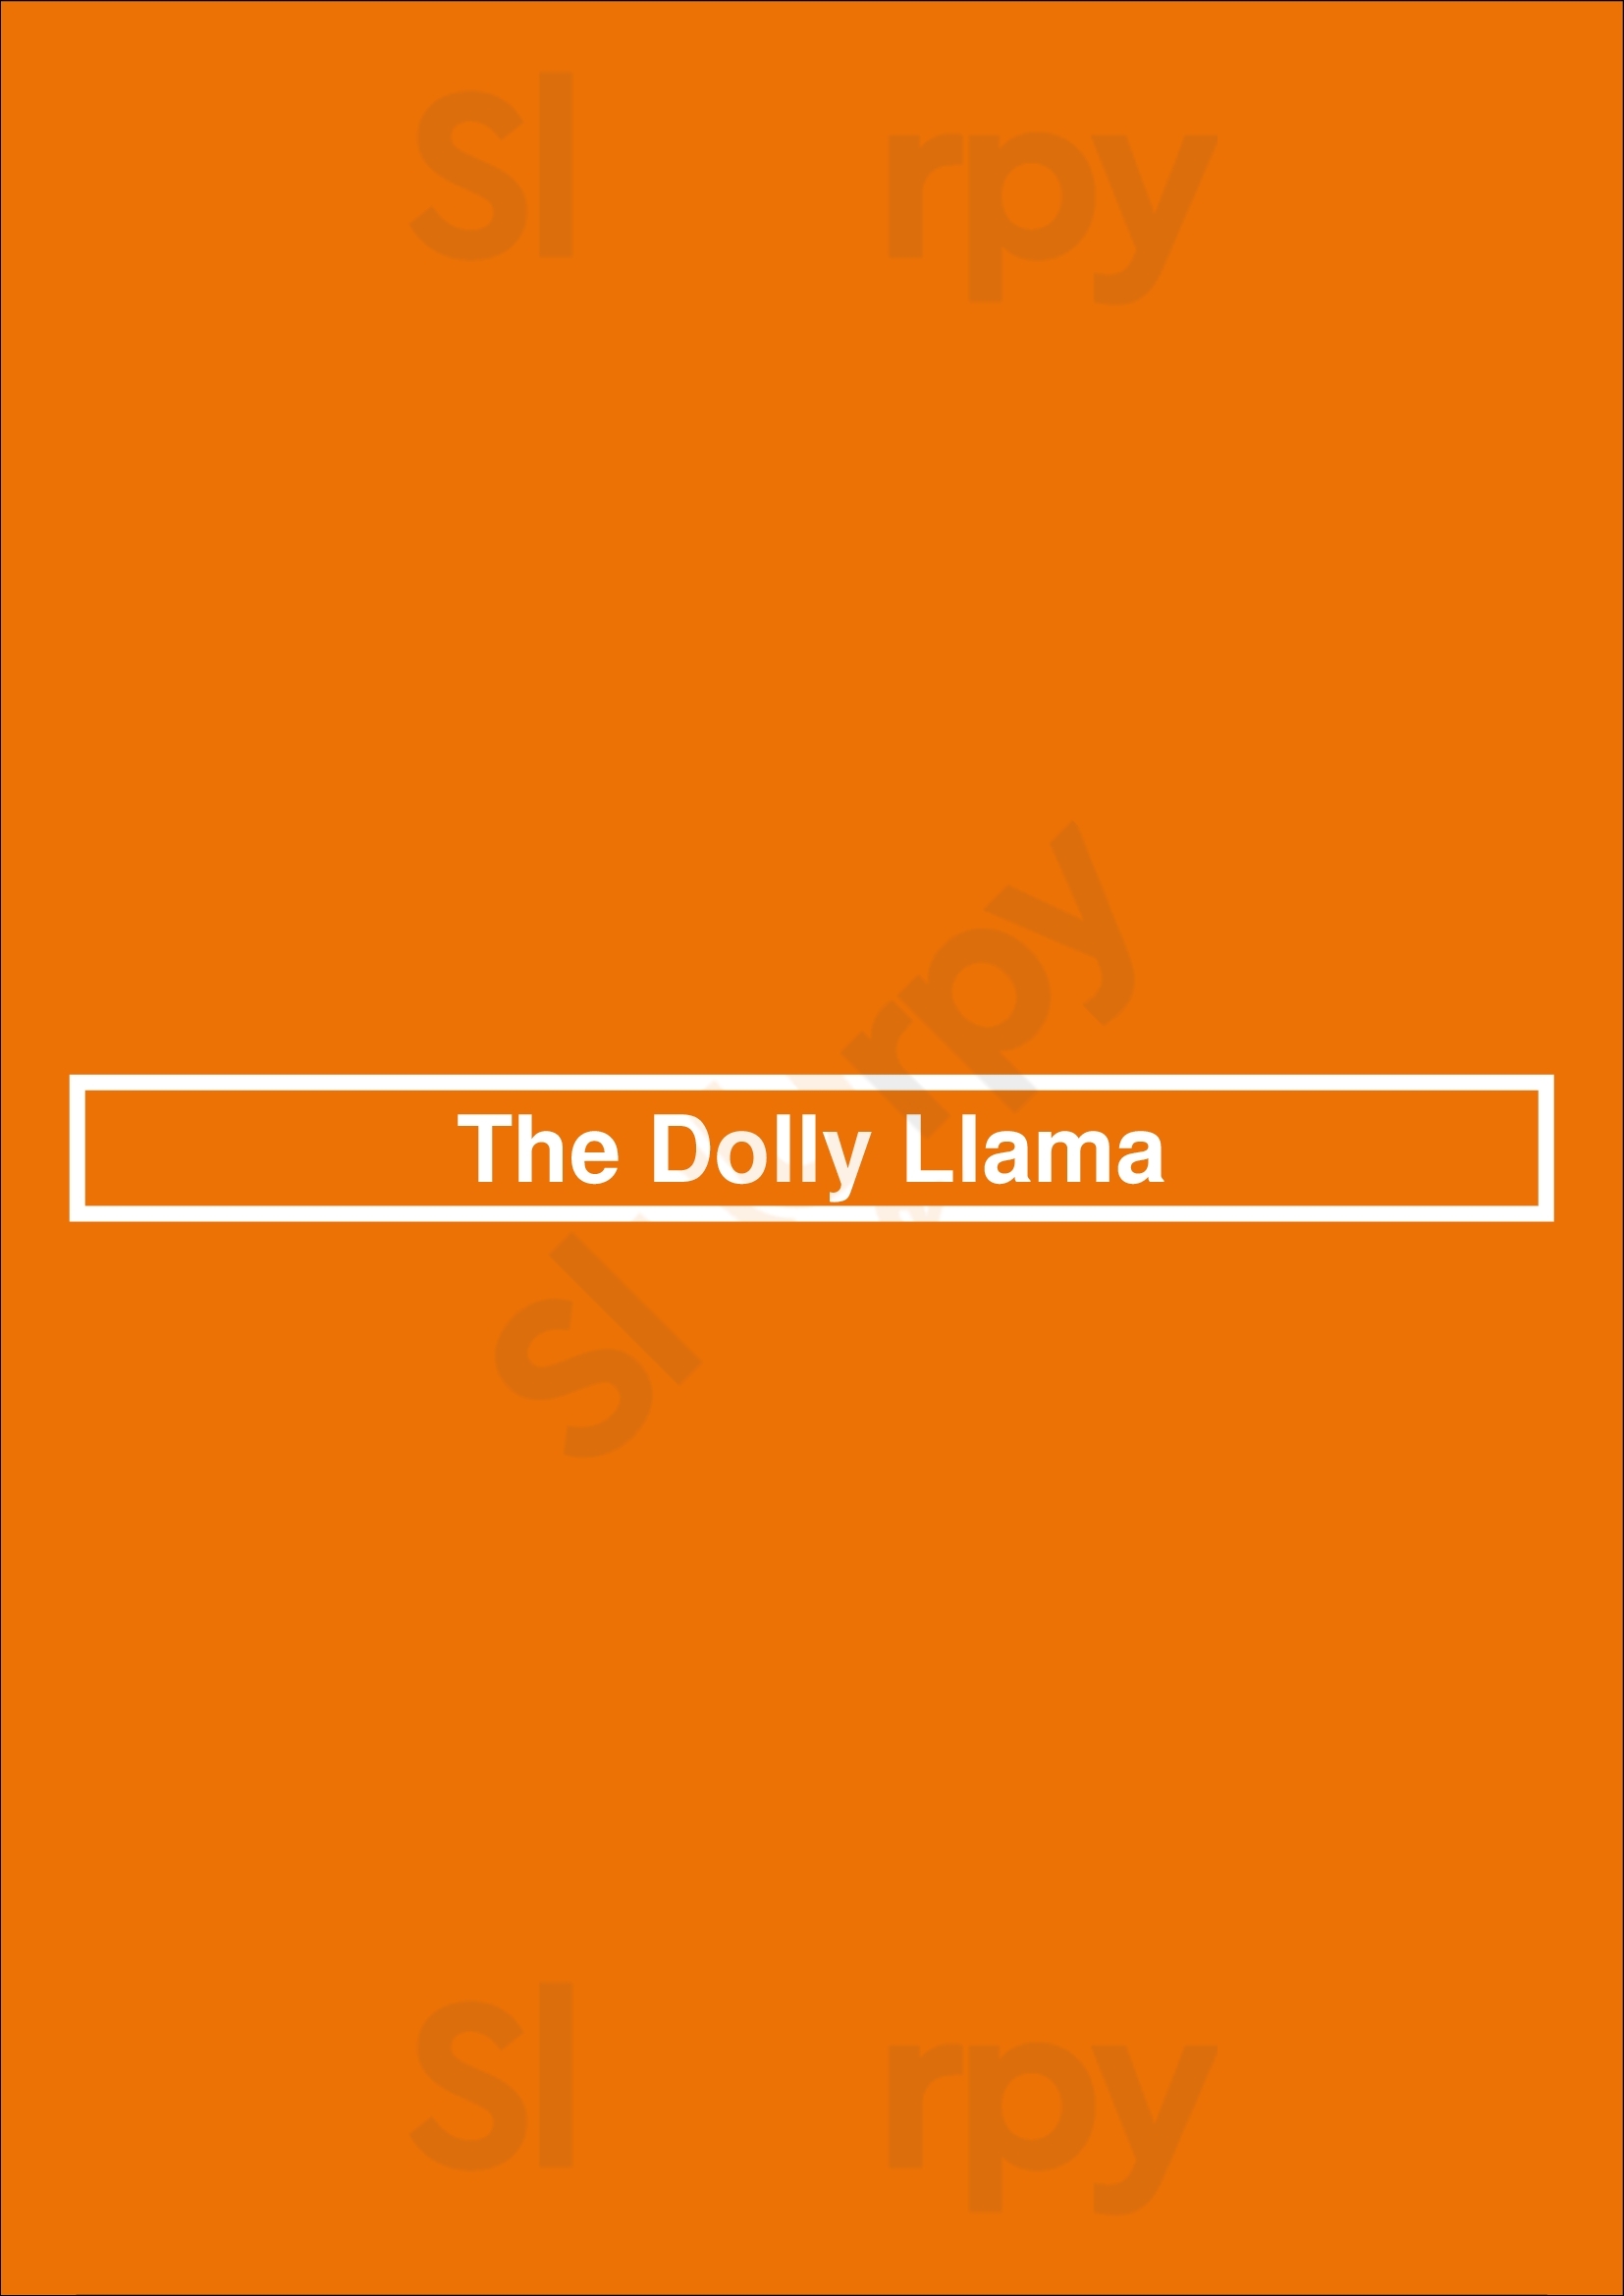 The Dolly Llama Los Angeles Menu - 1